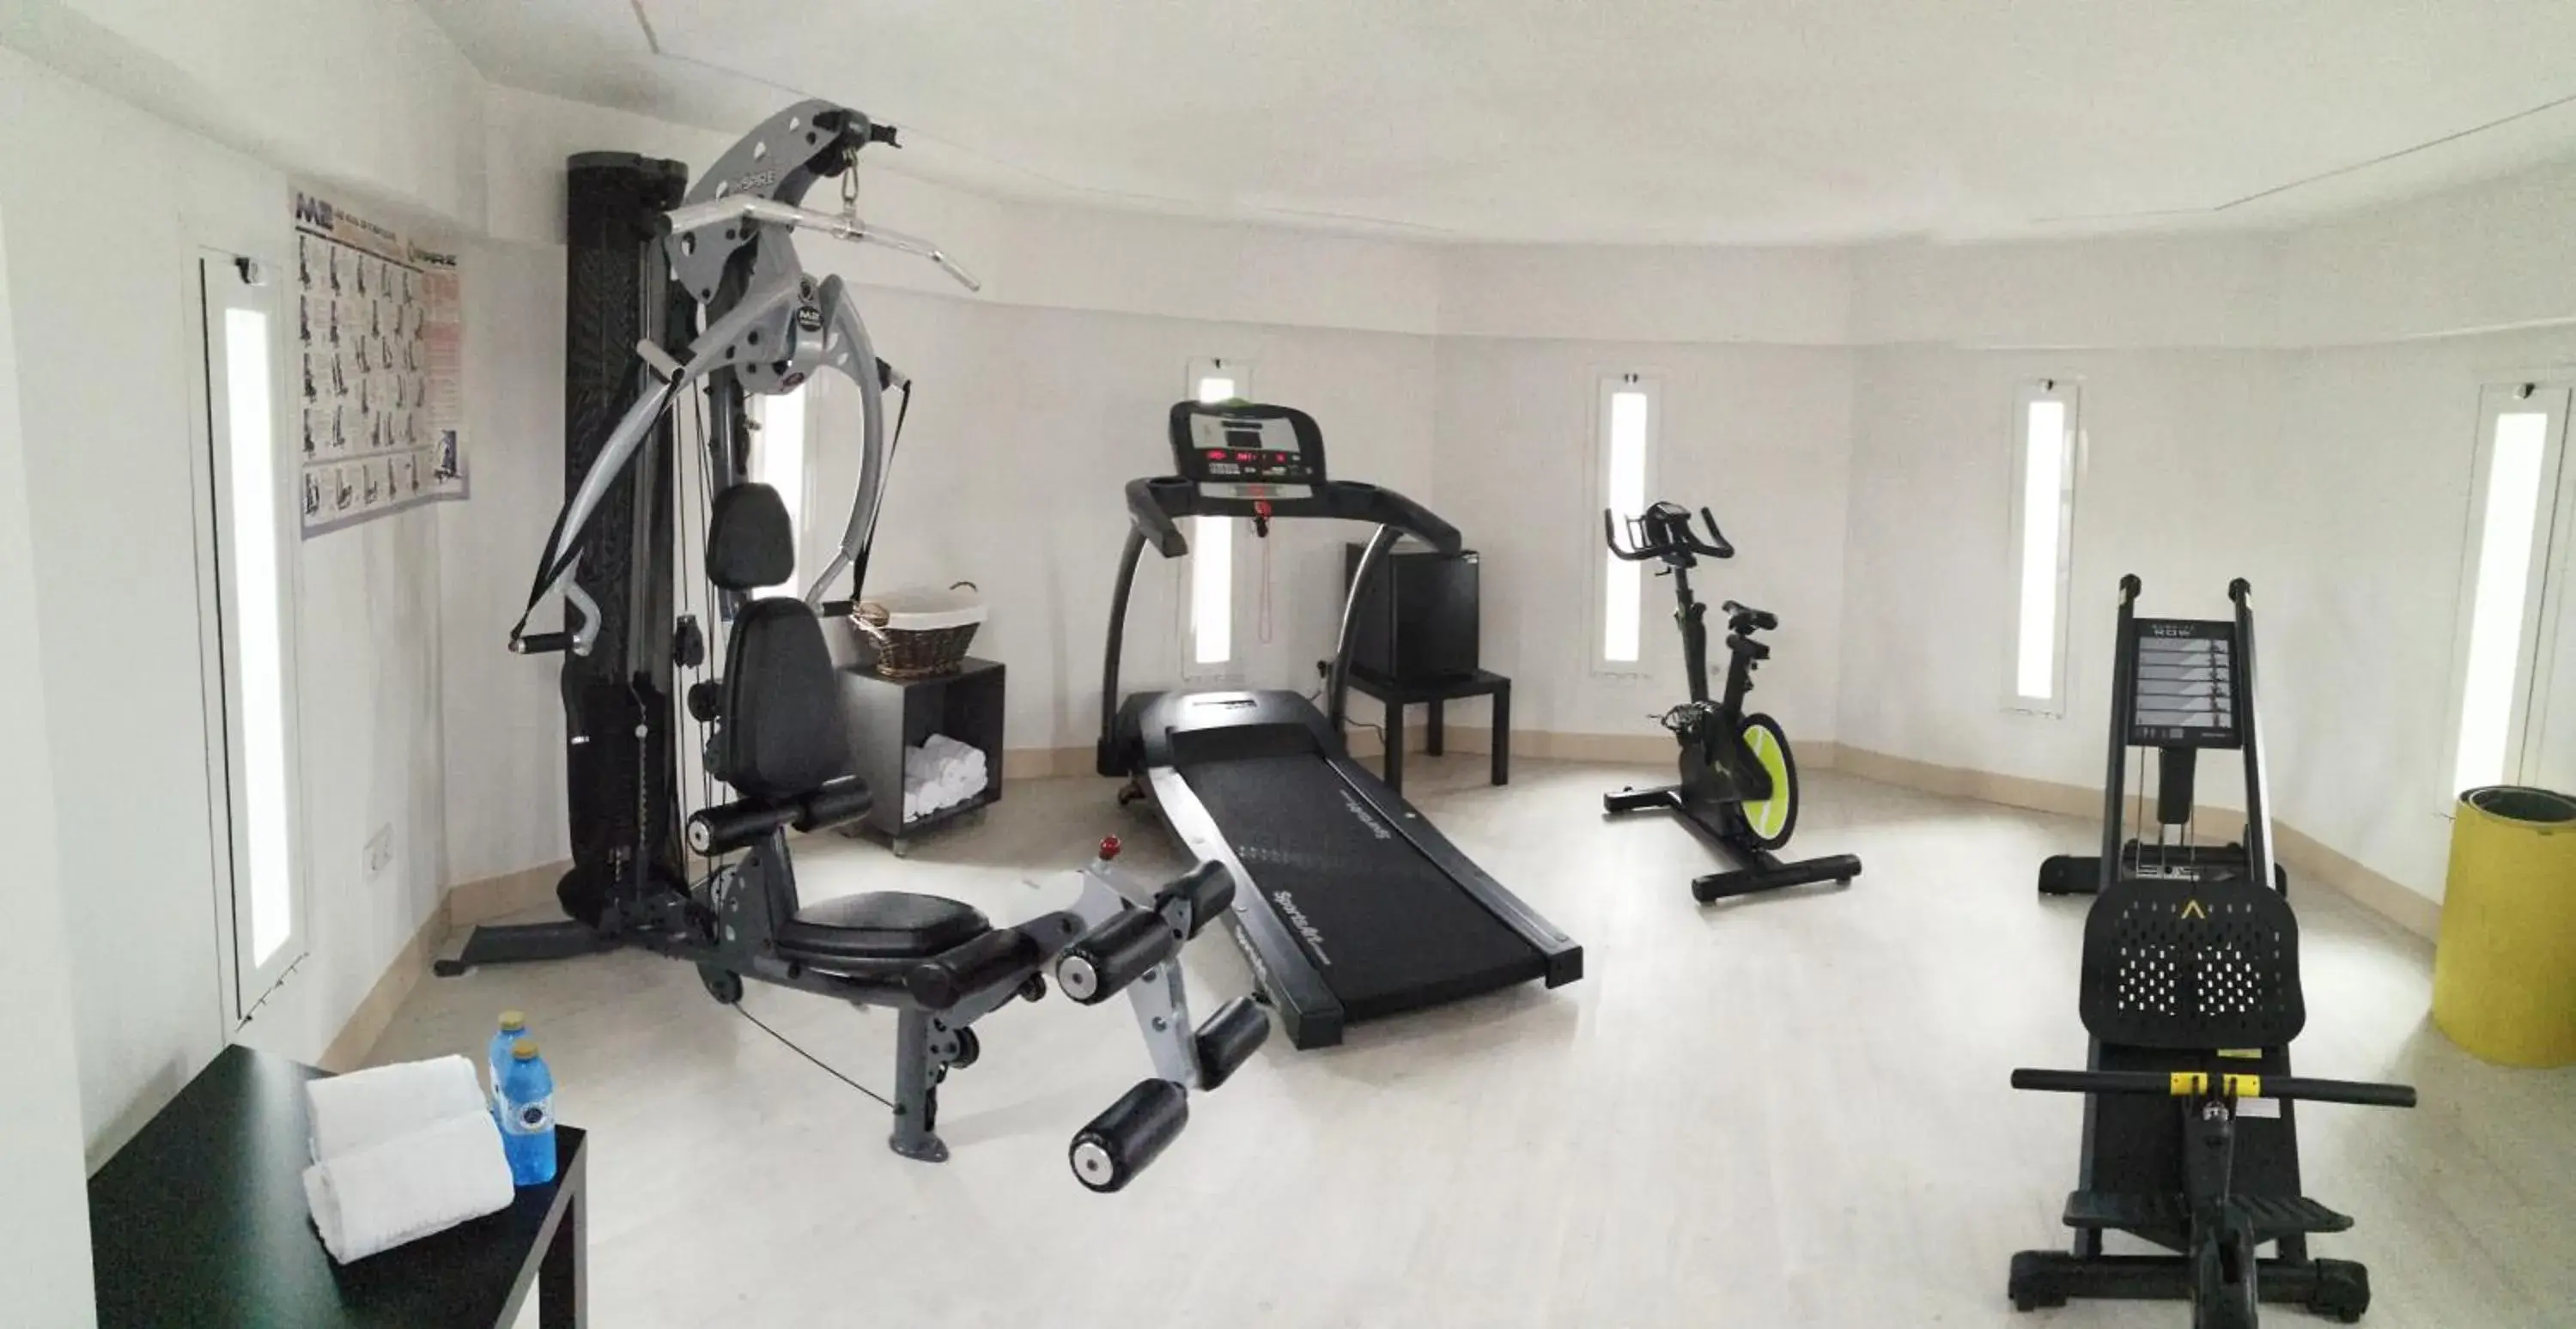 Fitness centre/facilities, Fitness Center/Facilities in Zenit Vigo